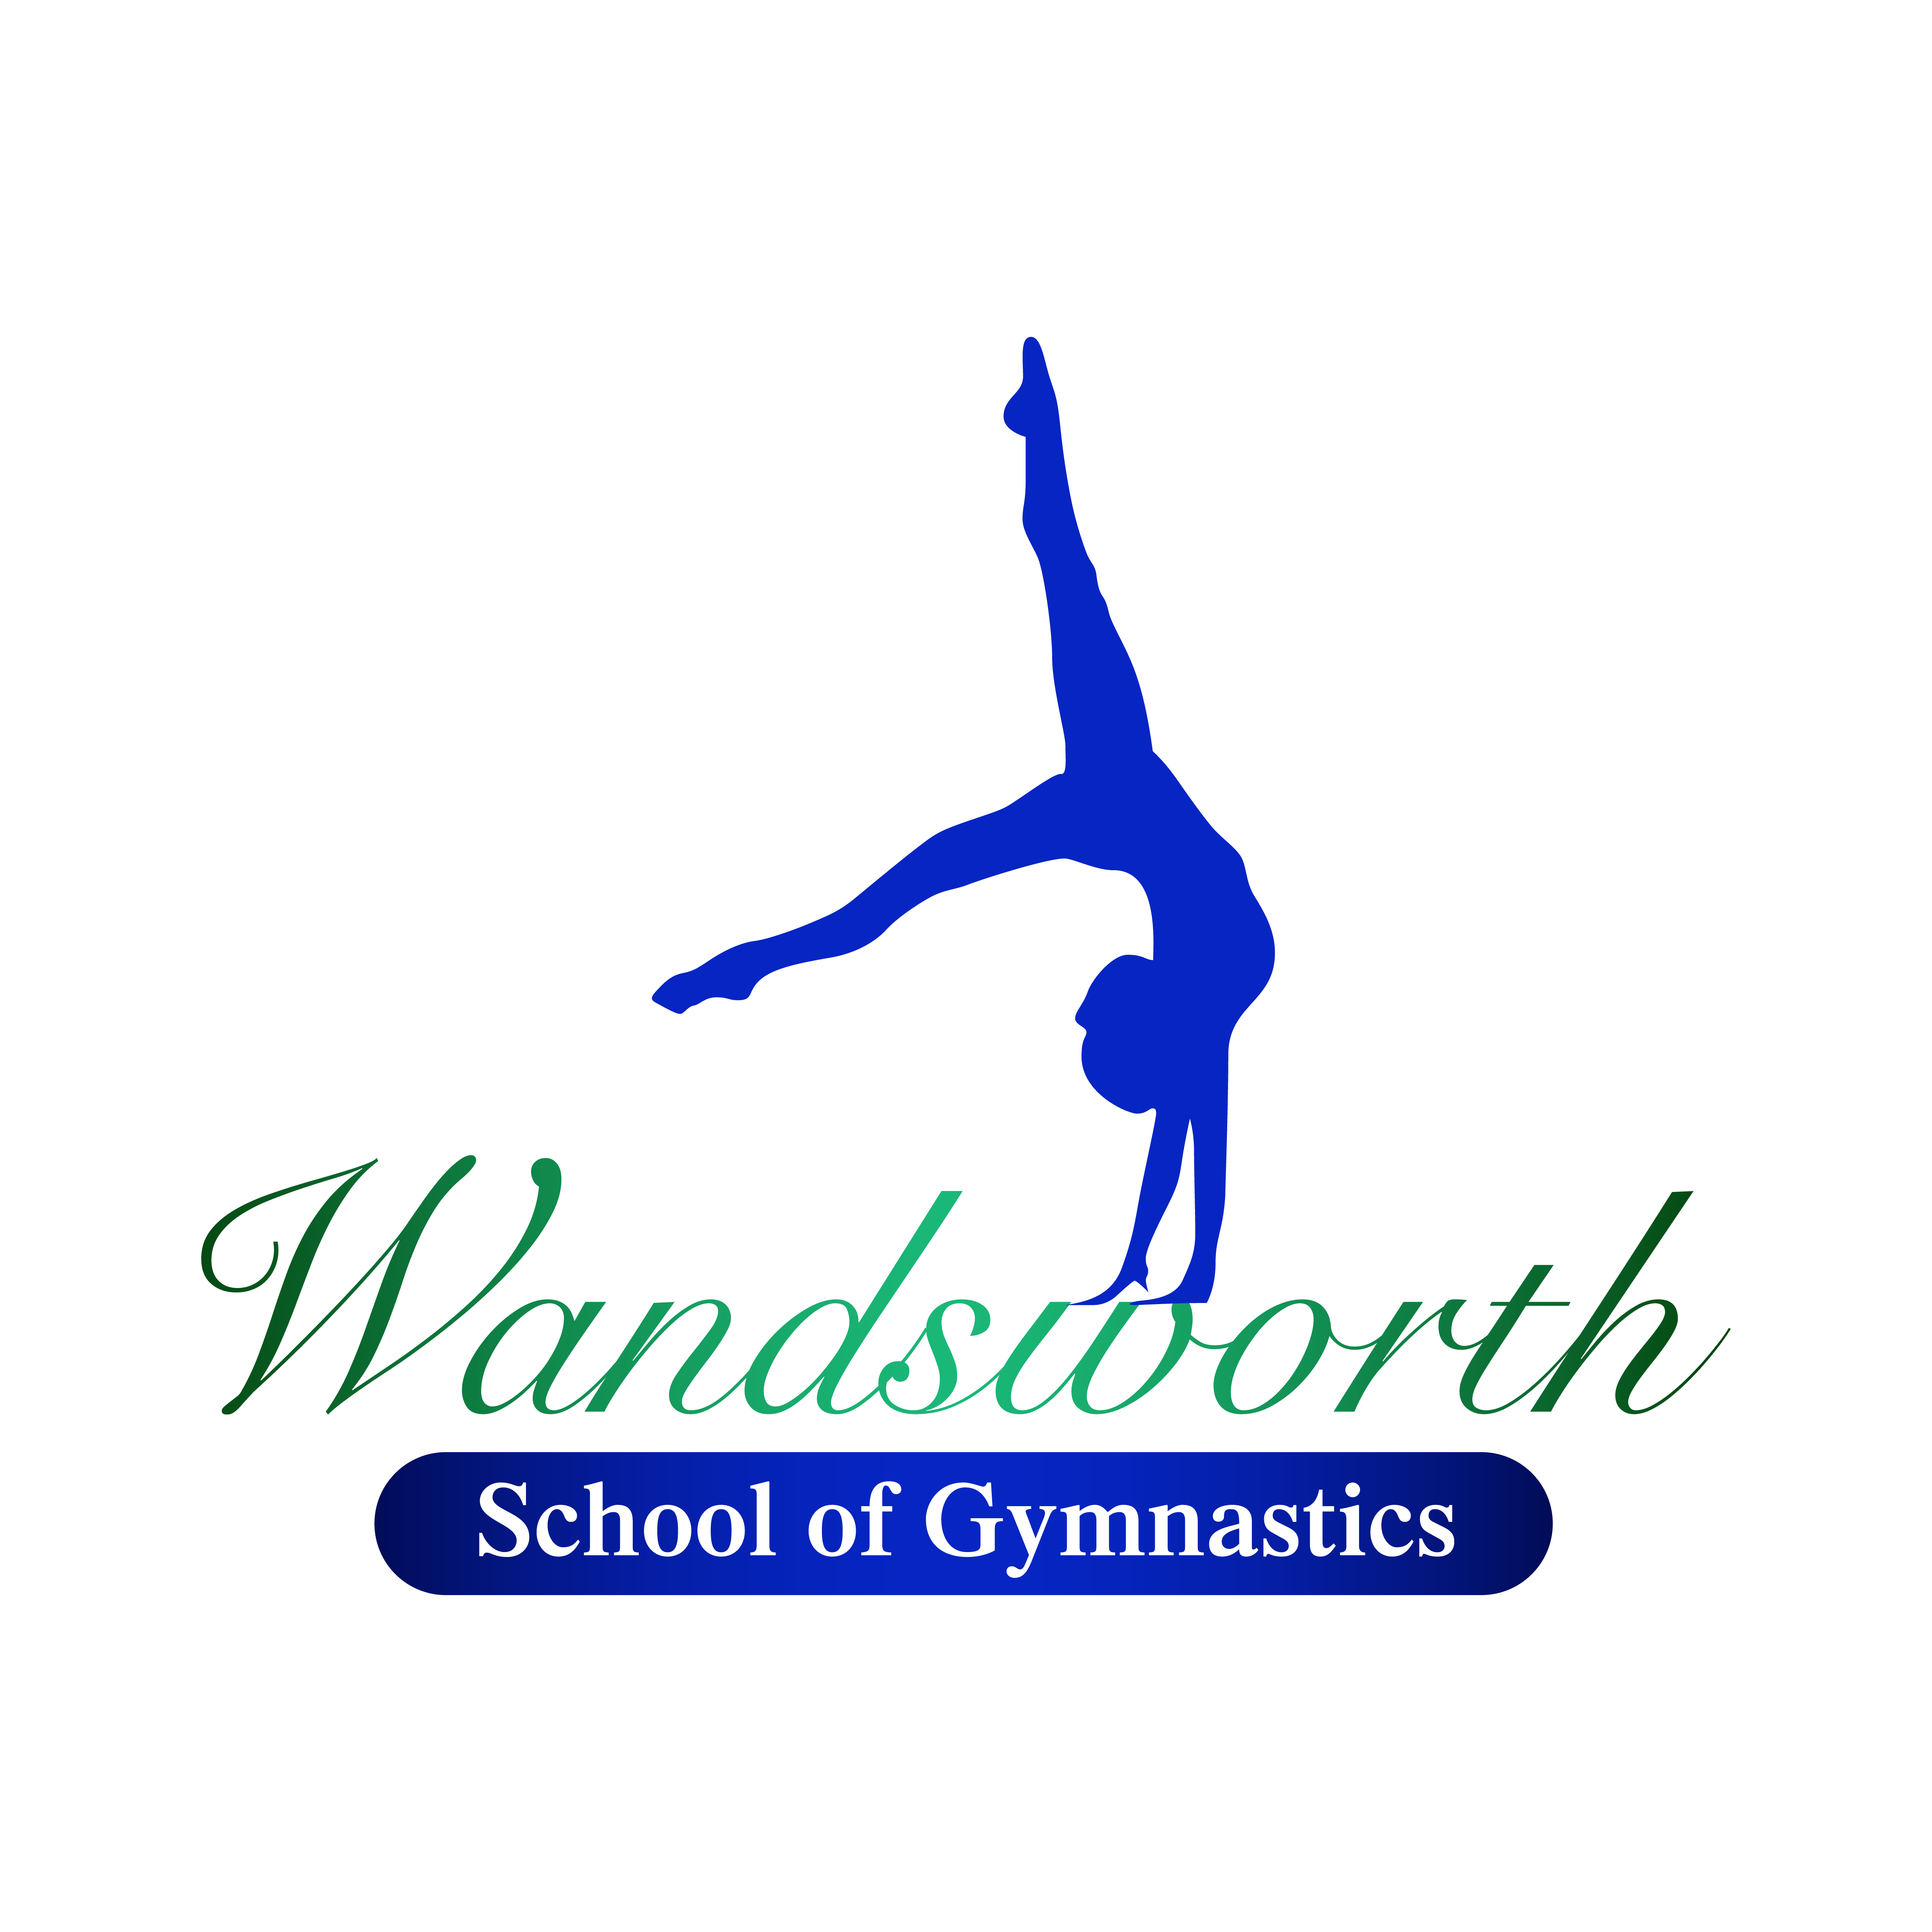 Wandsworth School of Gymnastics